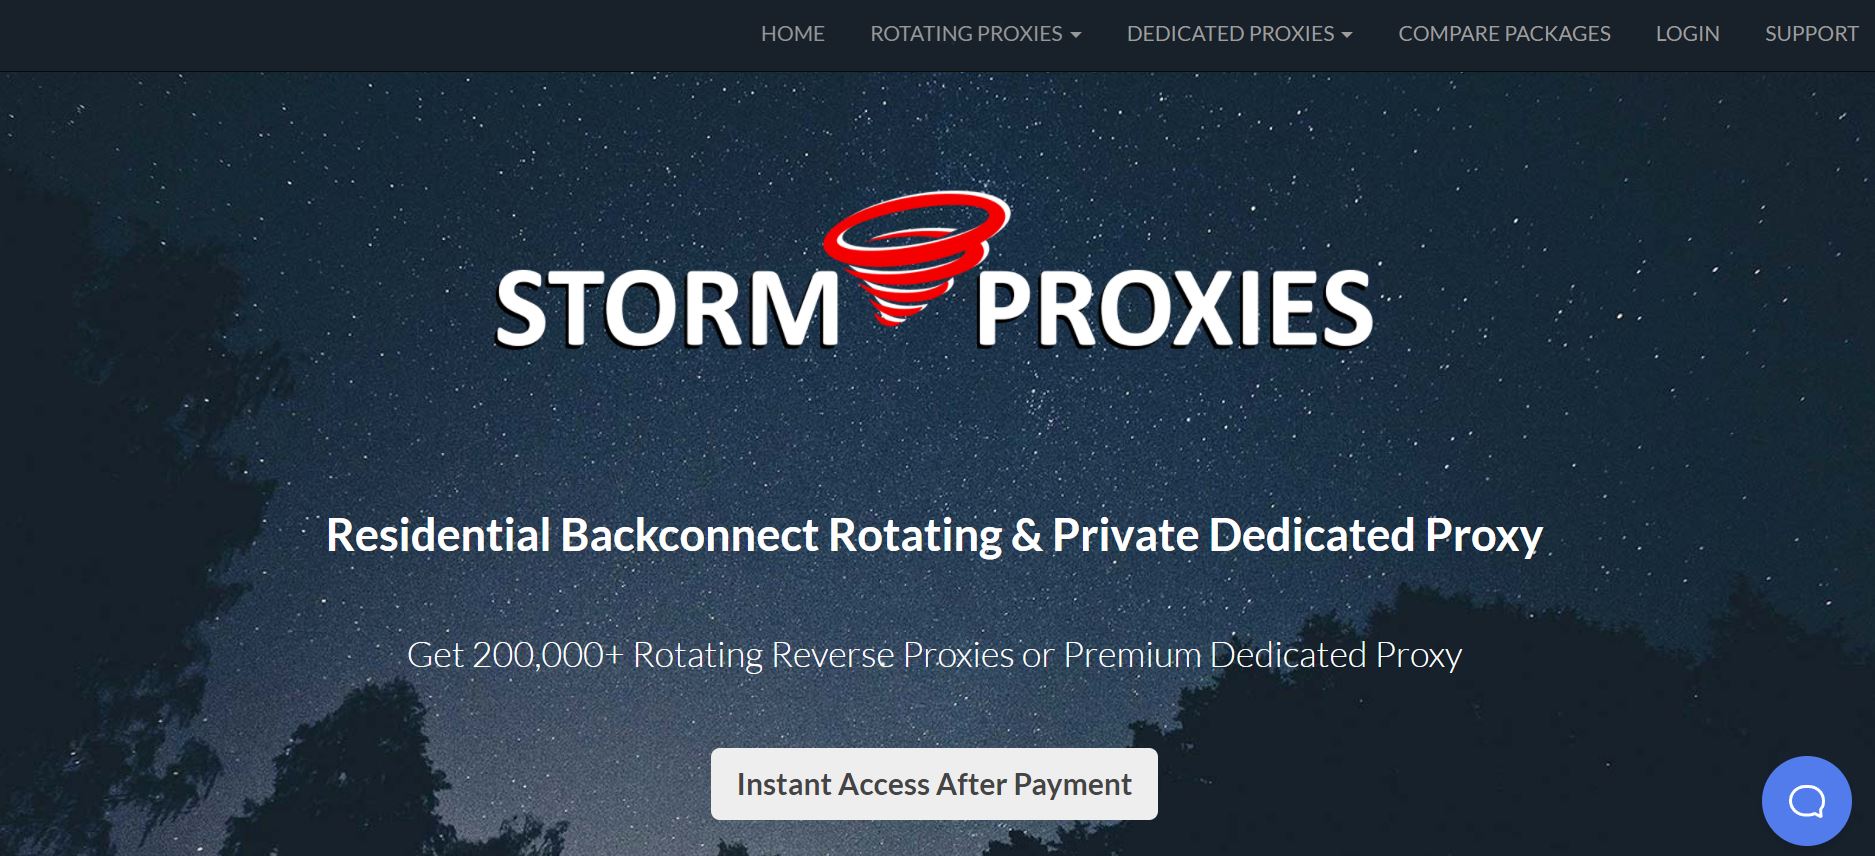 StormProxies- Best Rotating Proxies